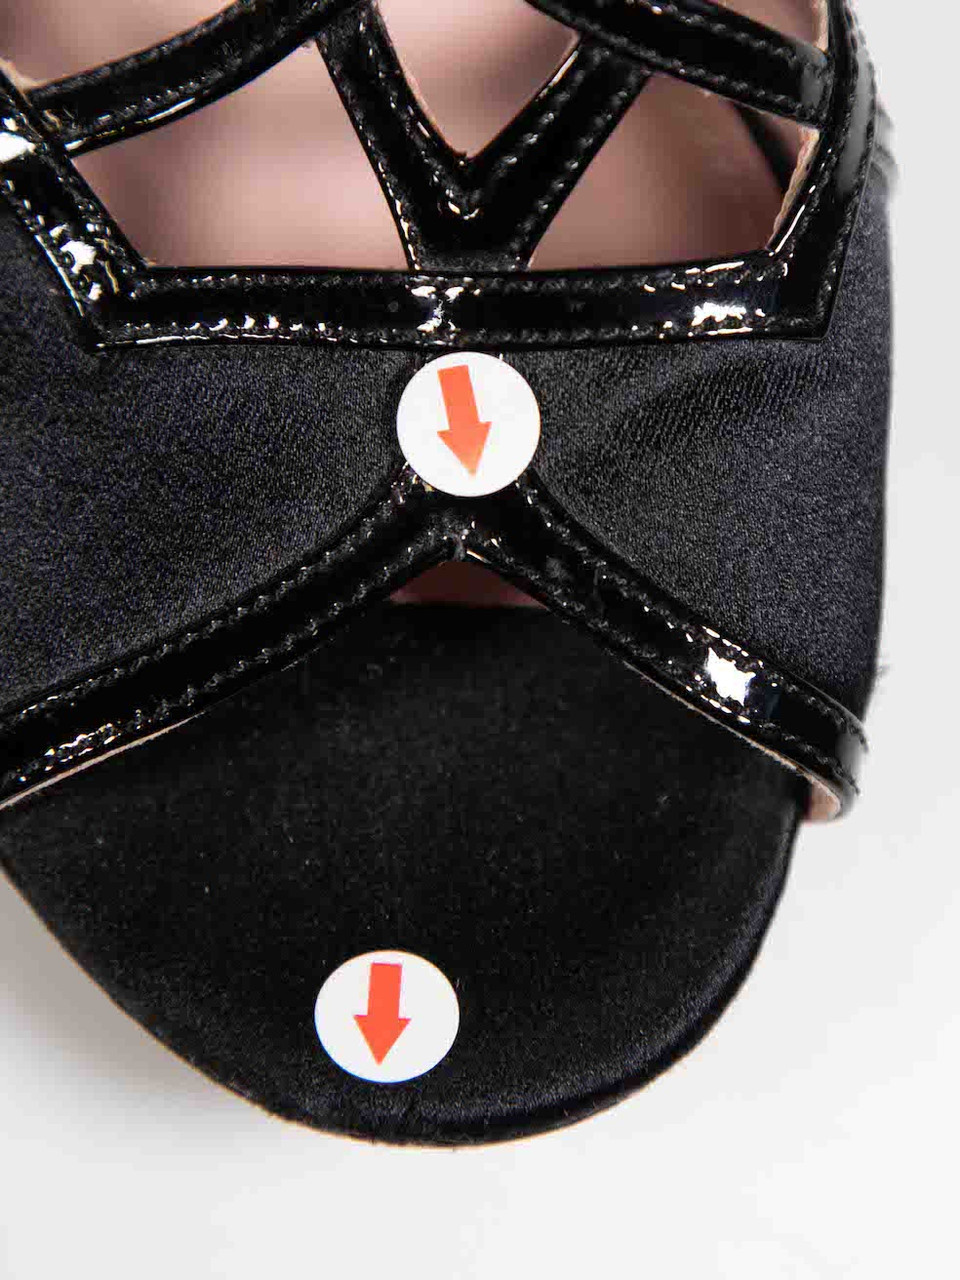 Prada Black Patent Leather Cork Wedge Sandals